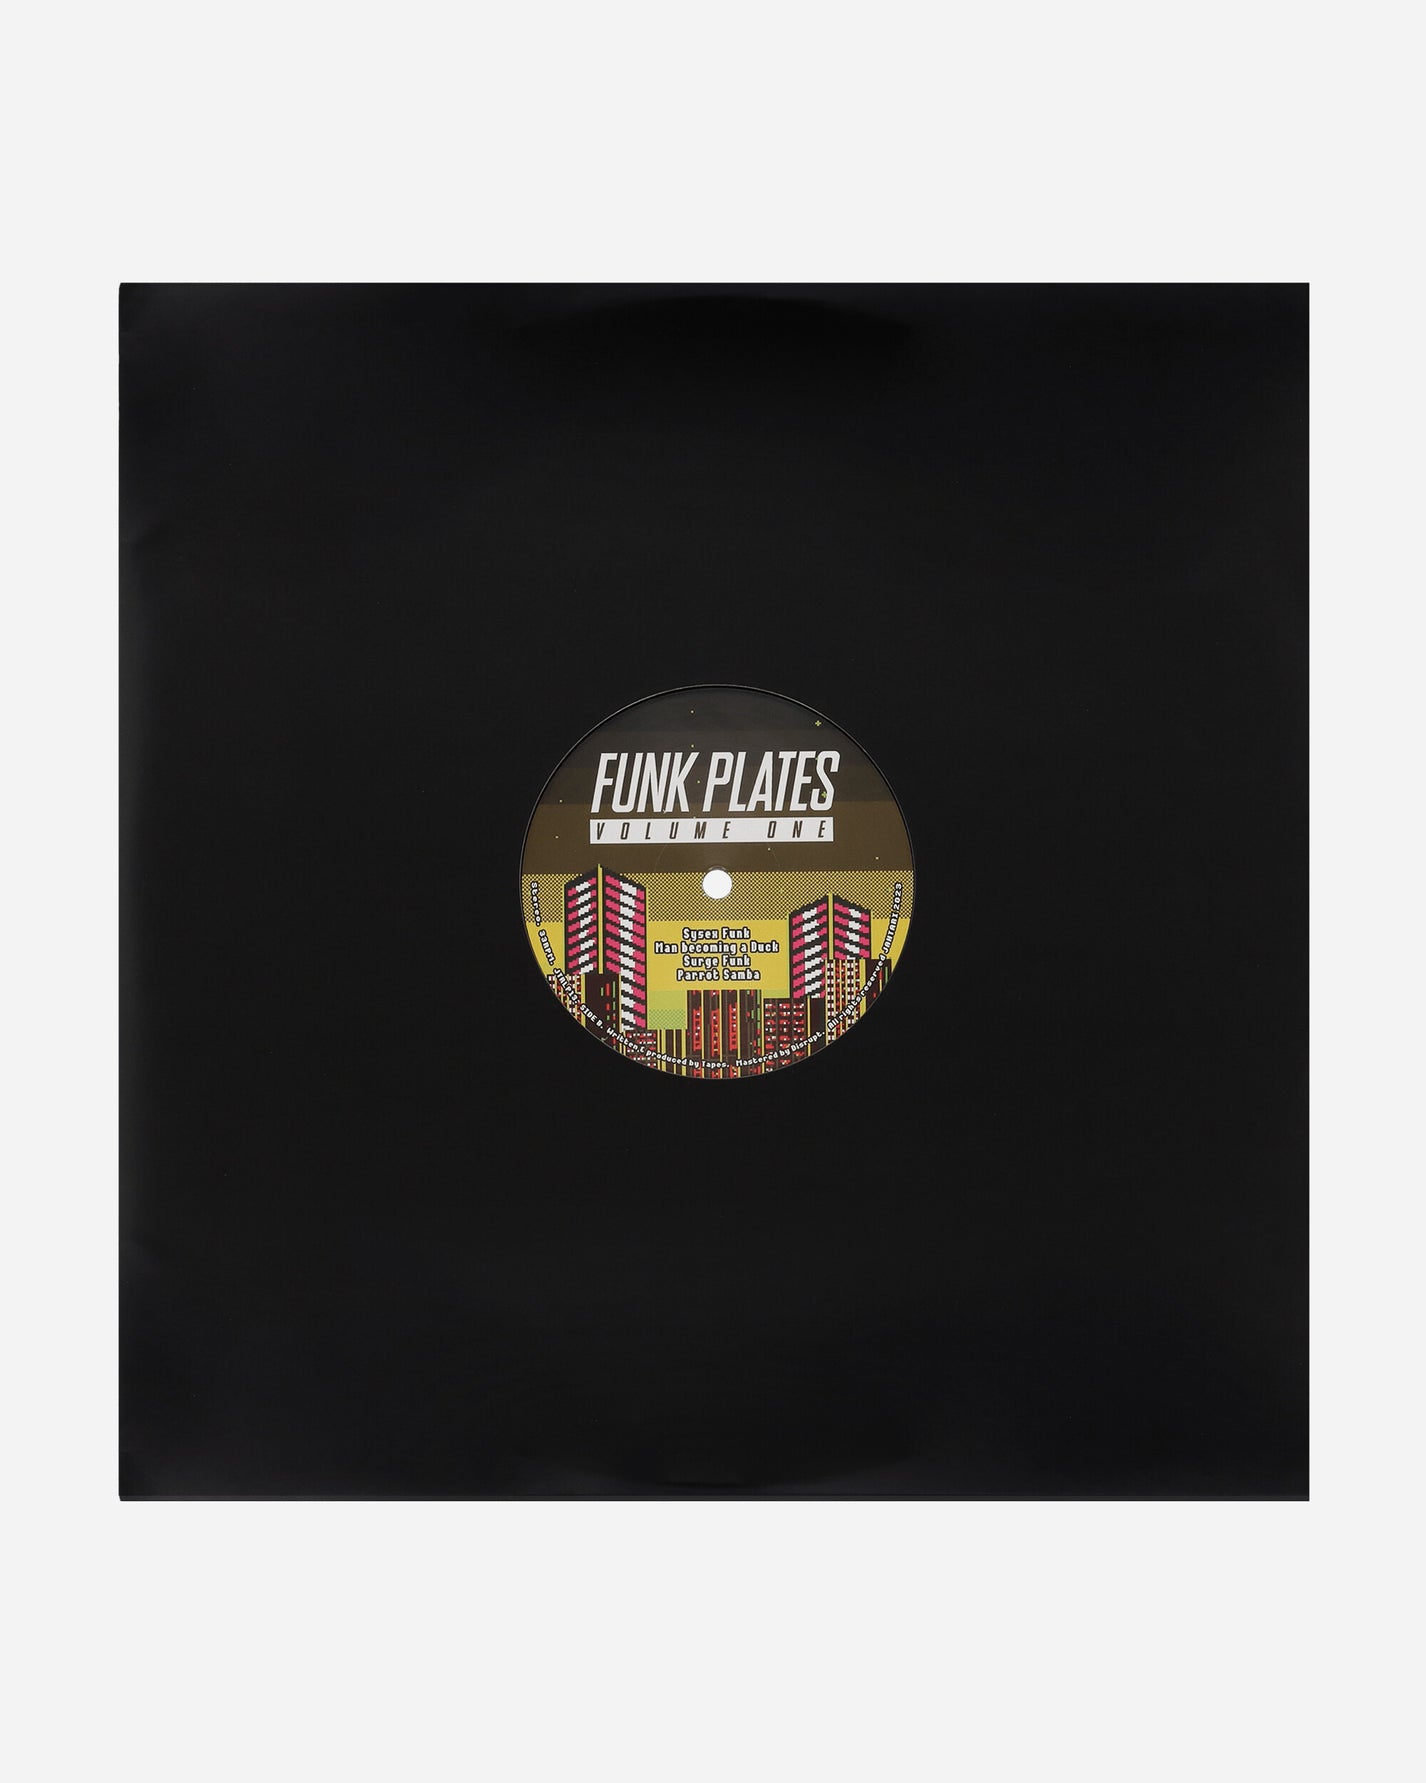 Vinyls Curated by Public Possession Tapes - Funk Plates Vol.1 Eulp Music Vinyls JTRLP13 001